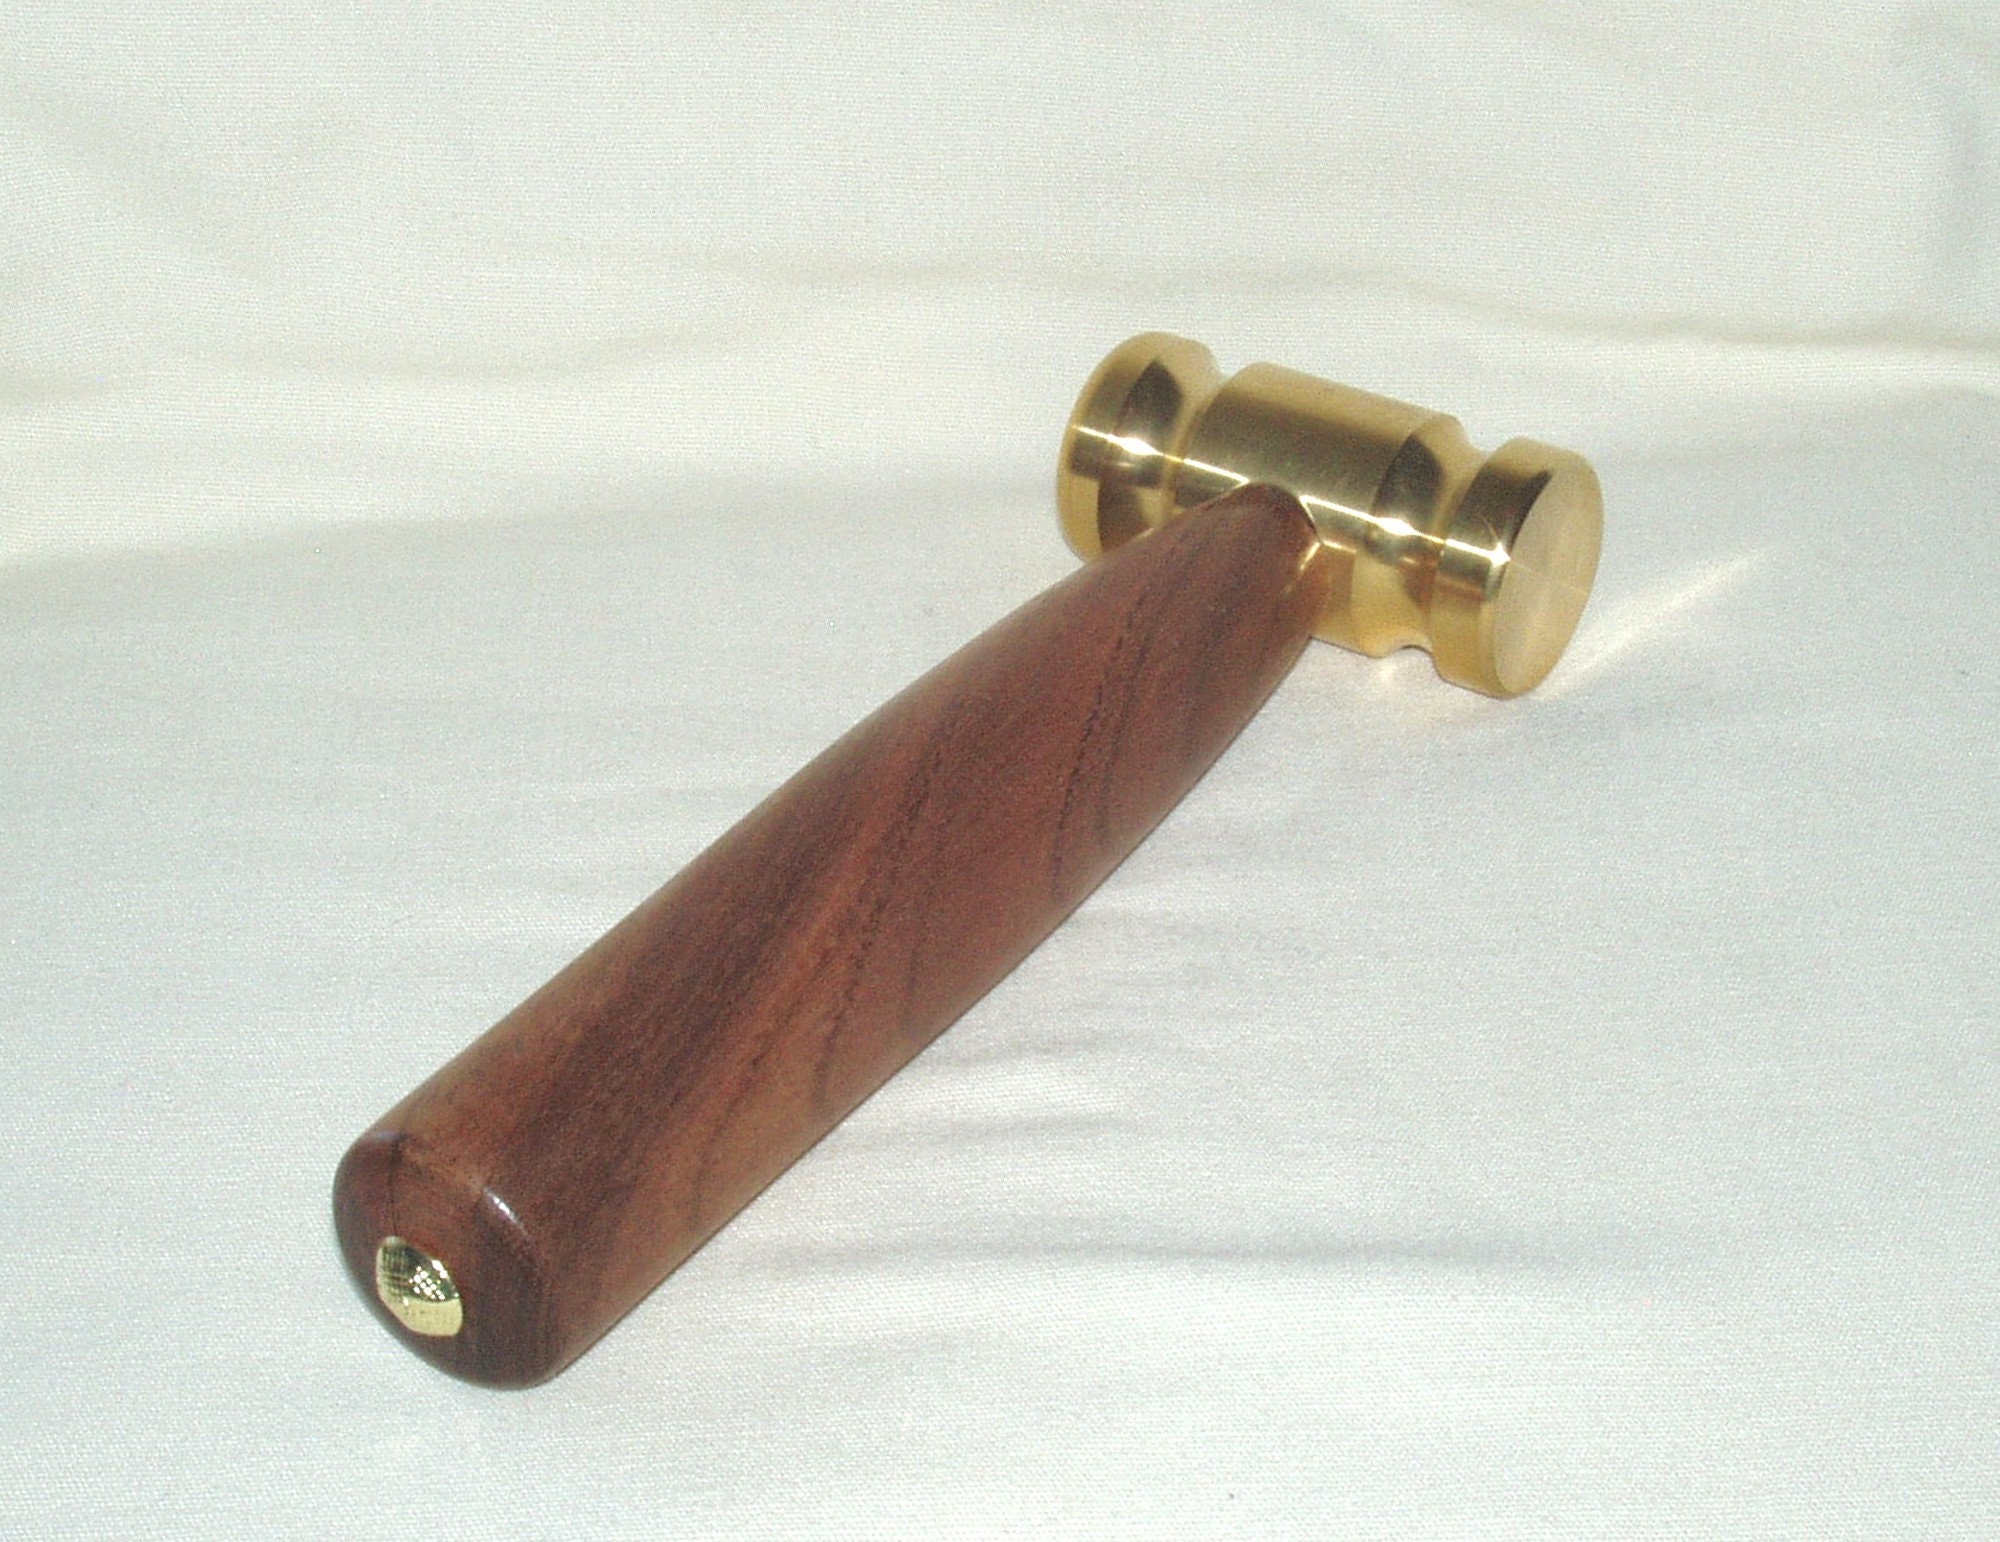 Brass Jeweler's Hammer